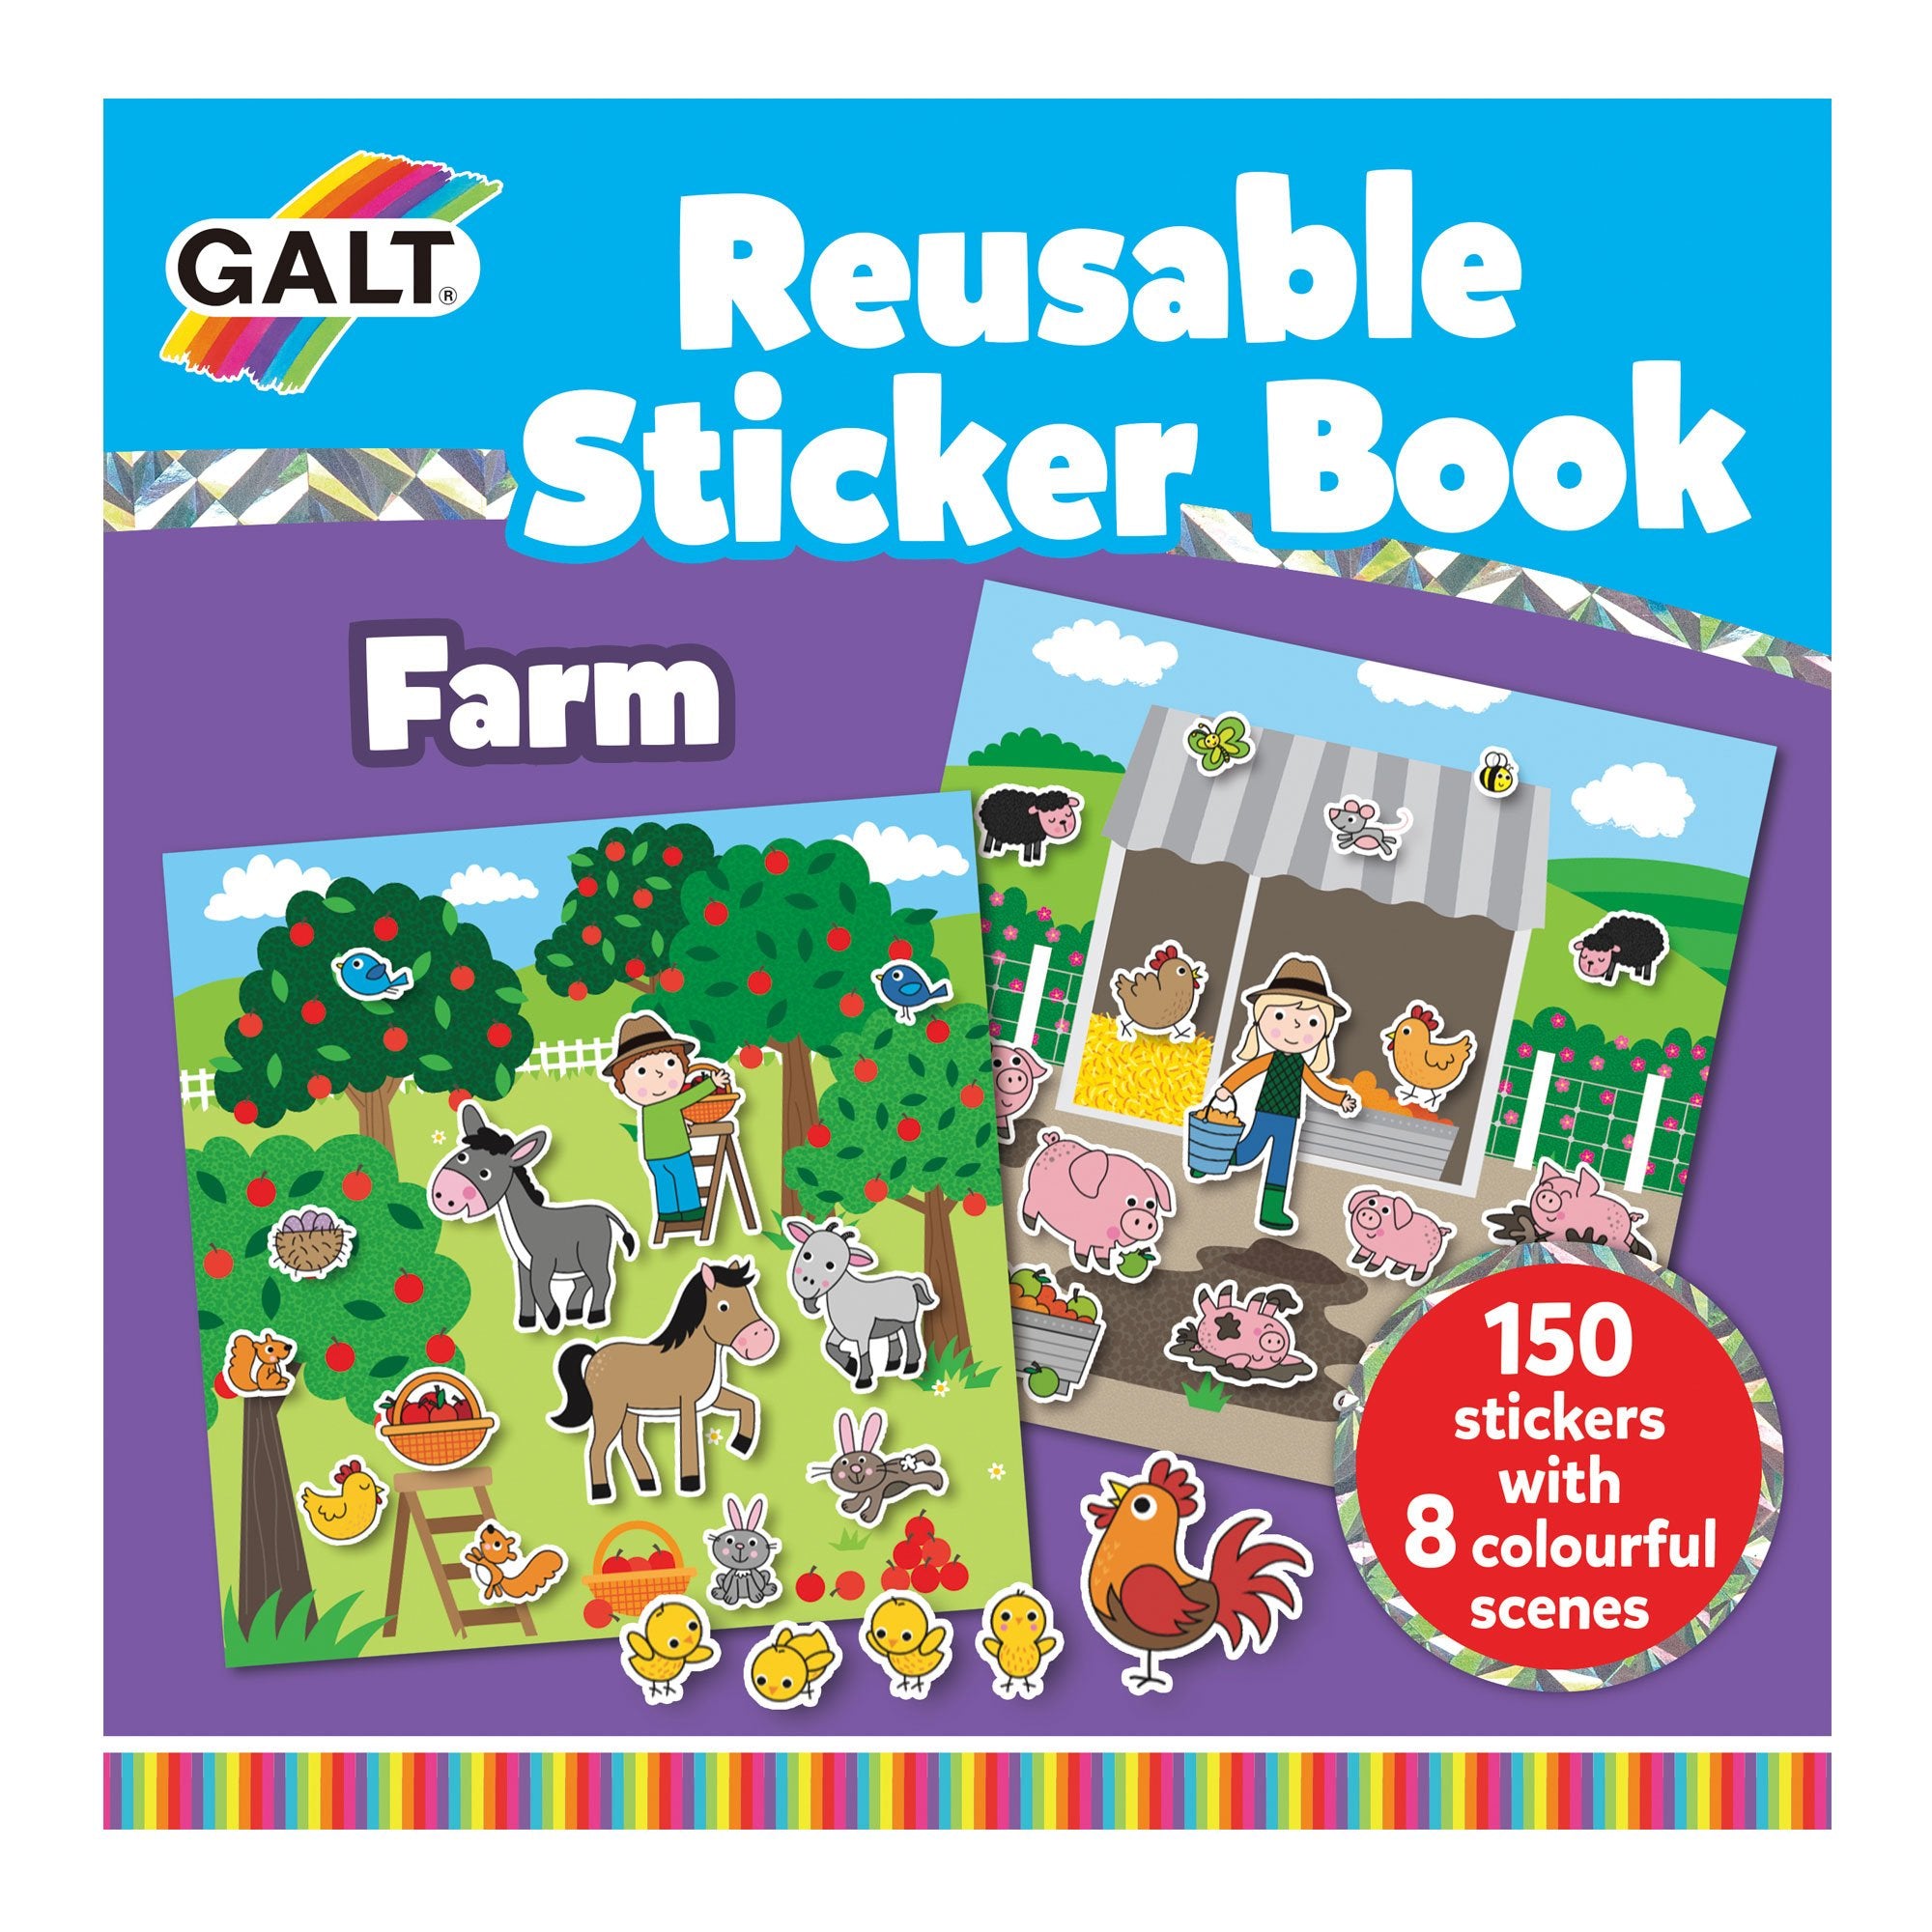 Reusable Sticker Book- Home on the Farm